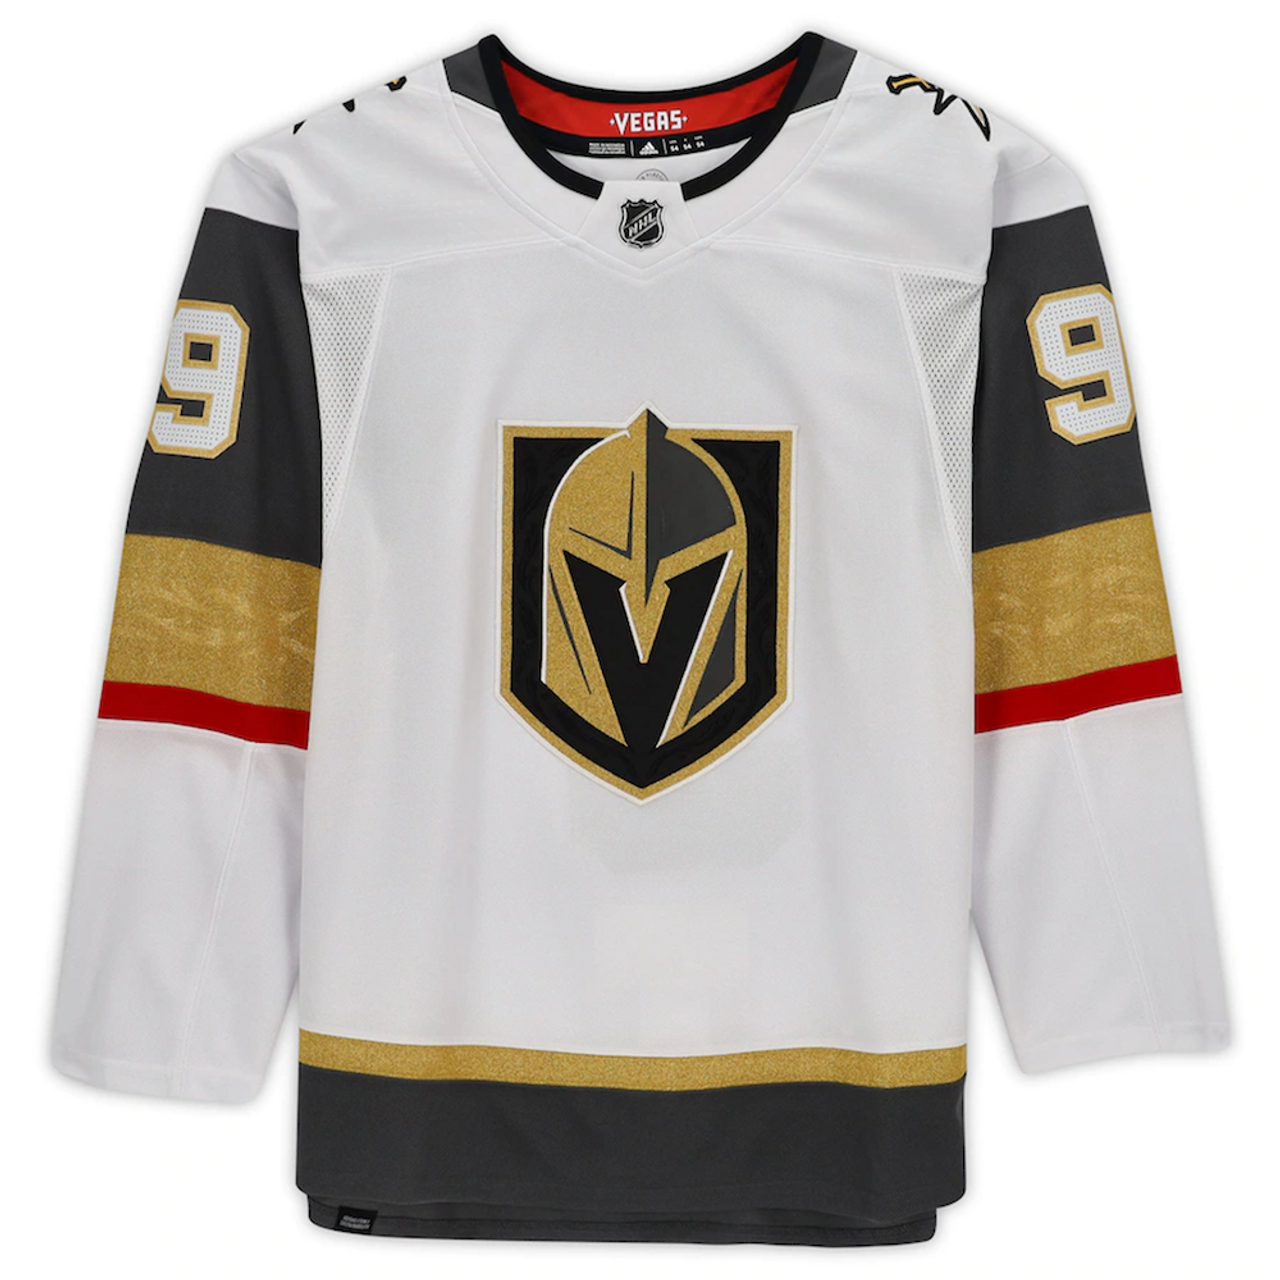 Vegas Golden Knights Jerseys, Knights Hockey Jerseys, Authentic